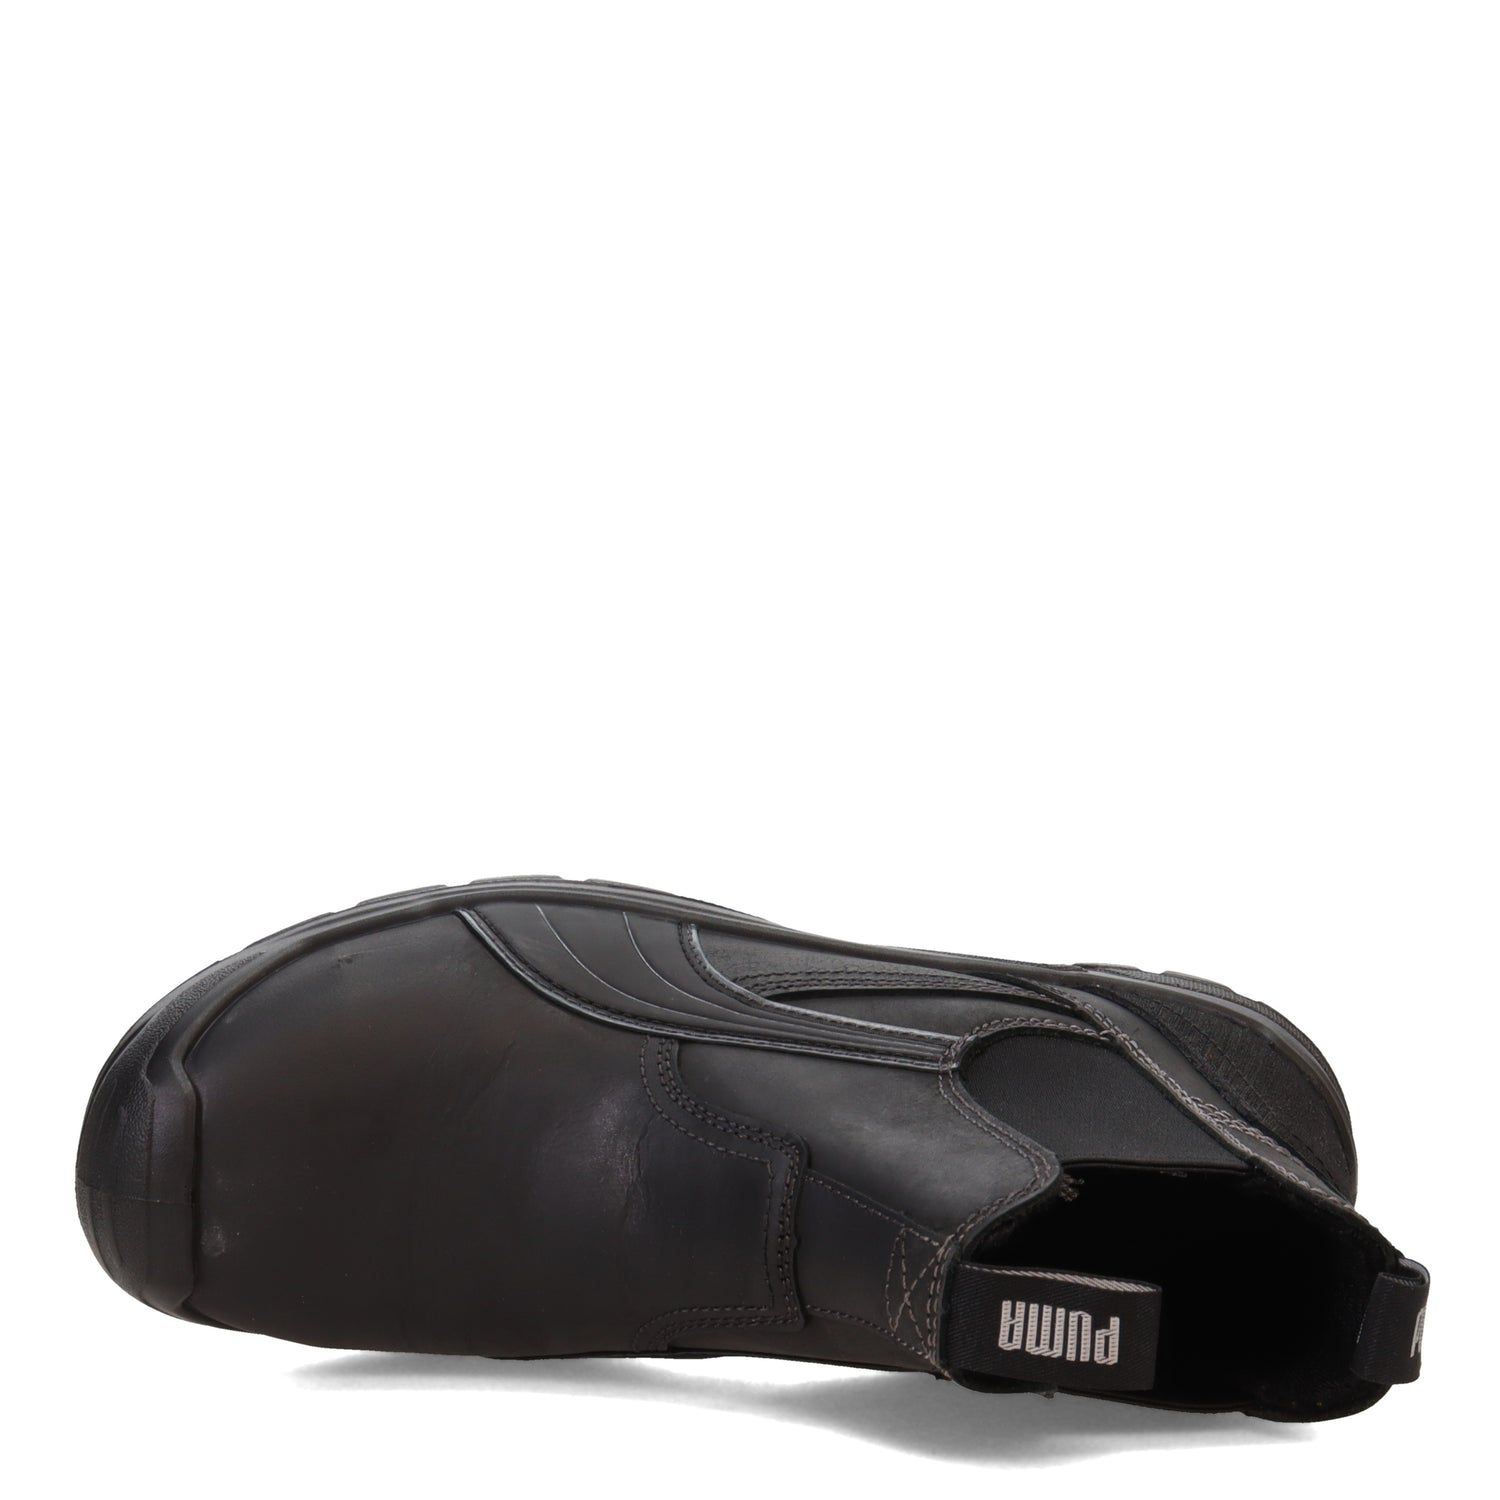 Peltz Shoes  Men's PUMA Safety Tanami Mid Comp Toe Boot BLACK 630345